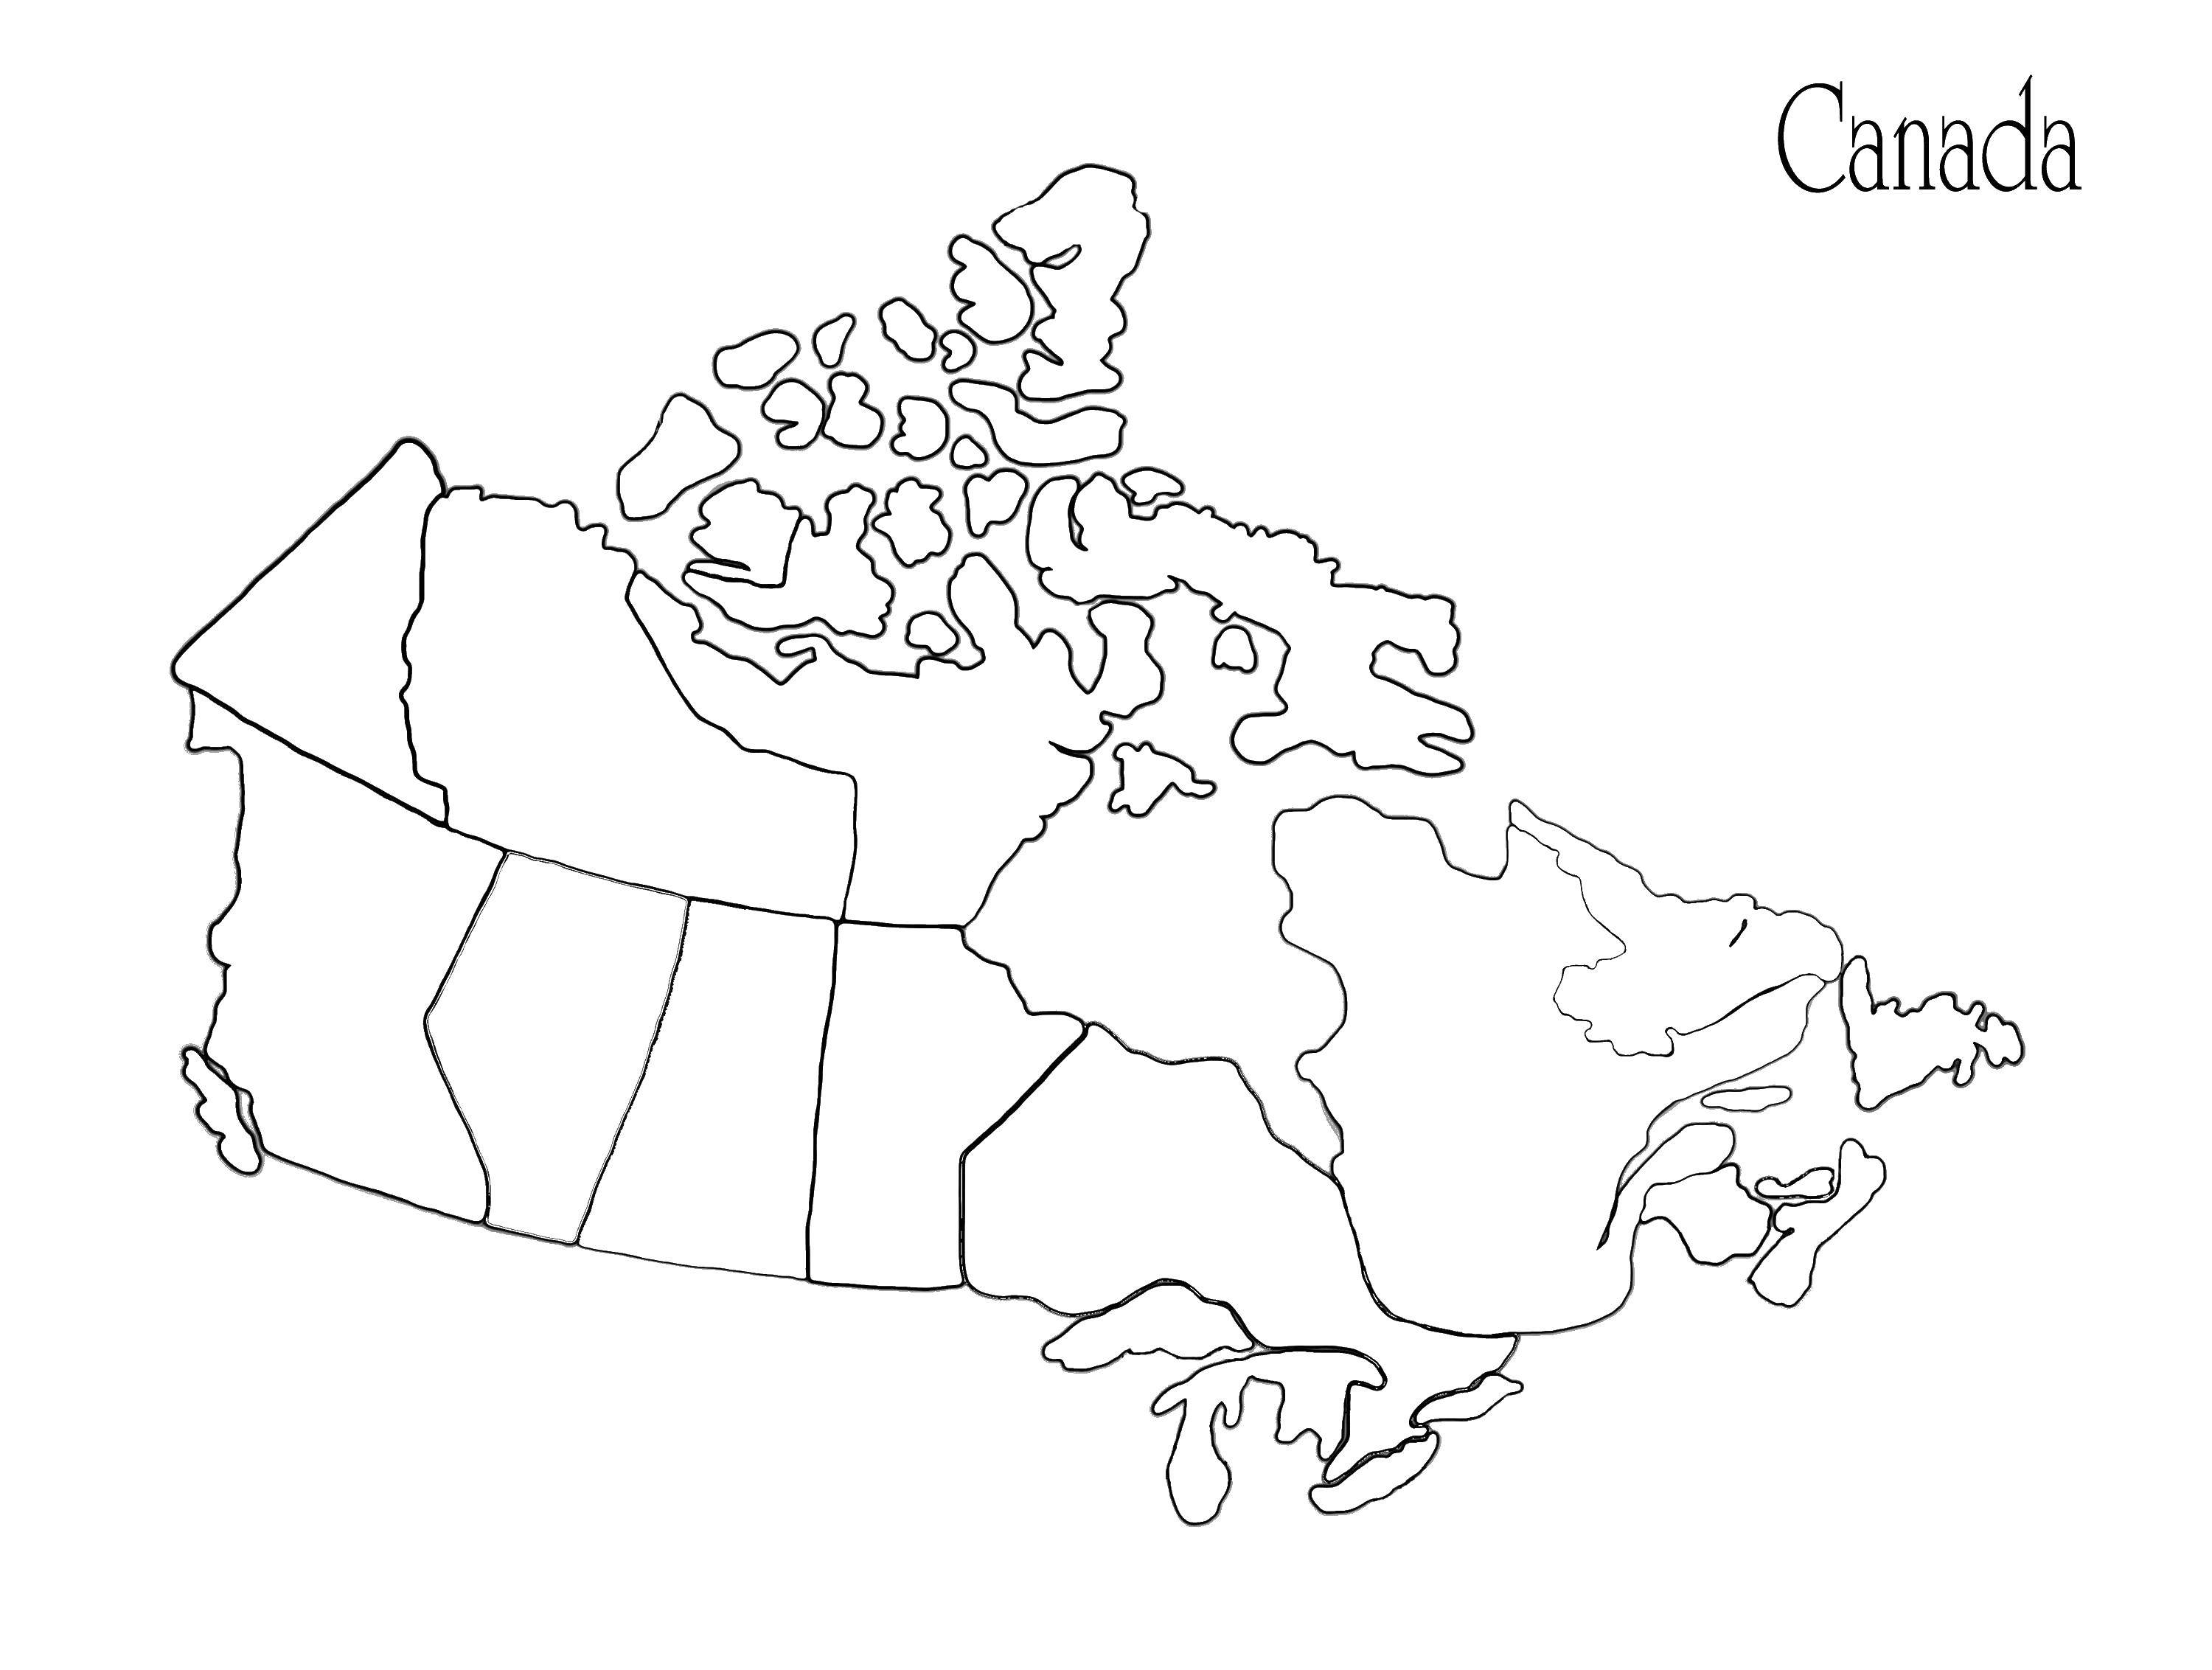 Название: Раскраска Карта канады. Категория: Карты. Теги: карты, канада.